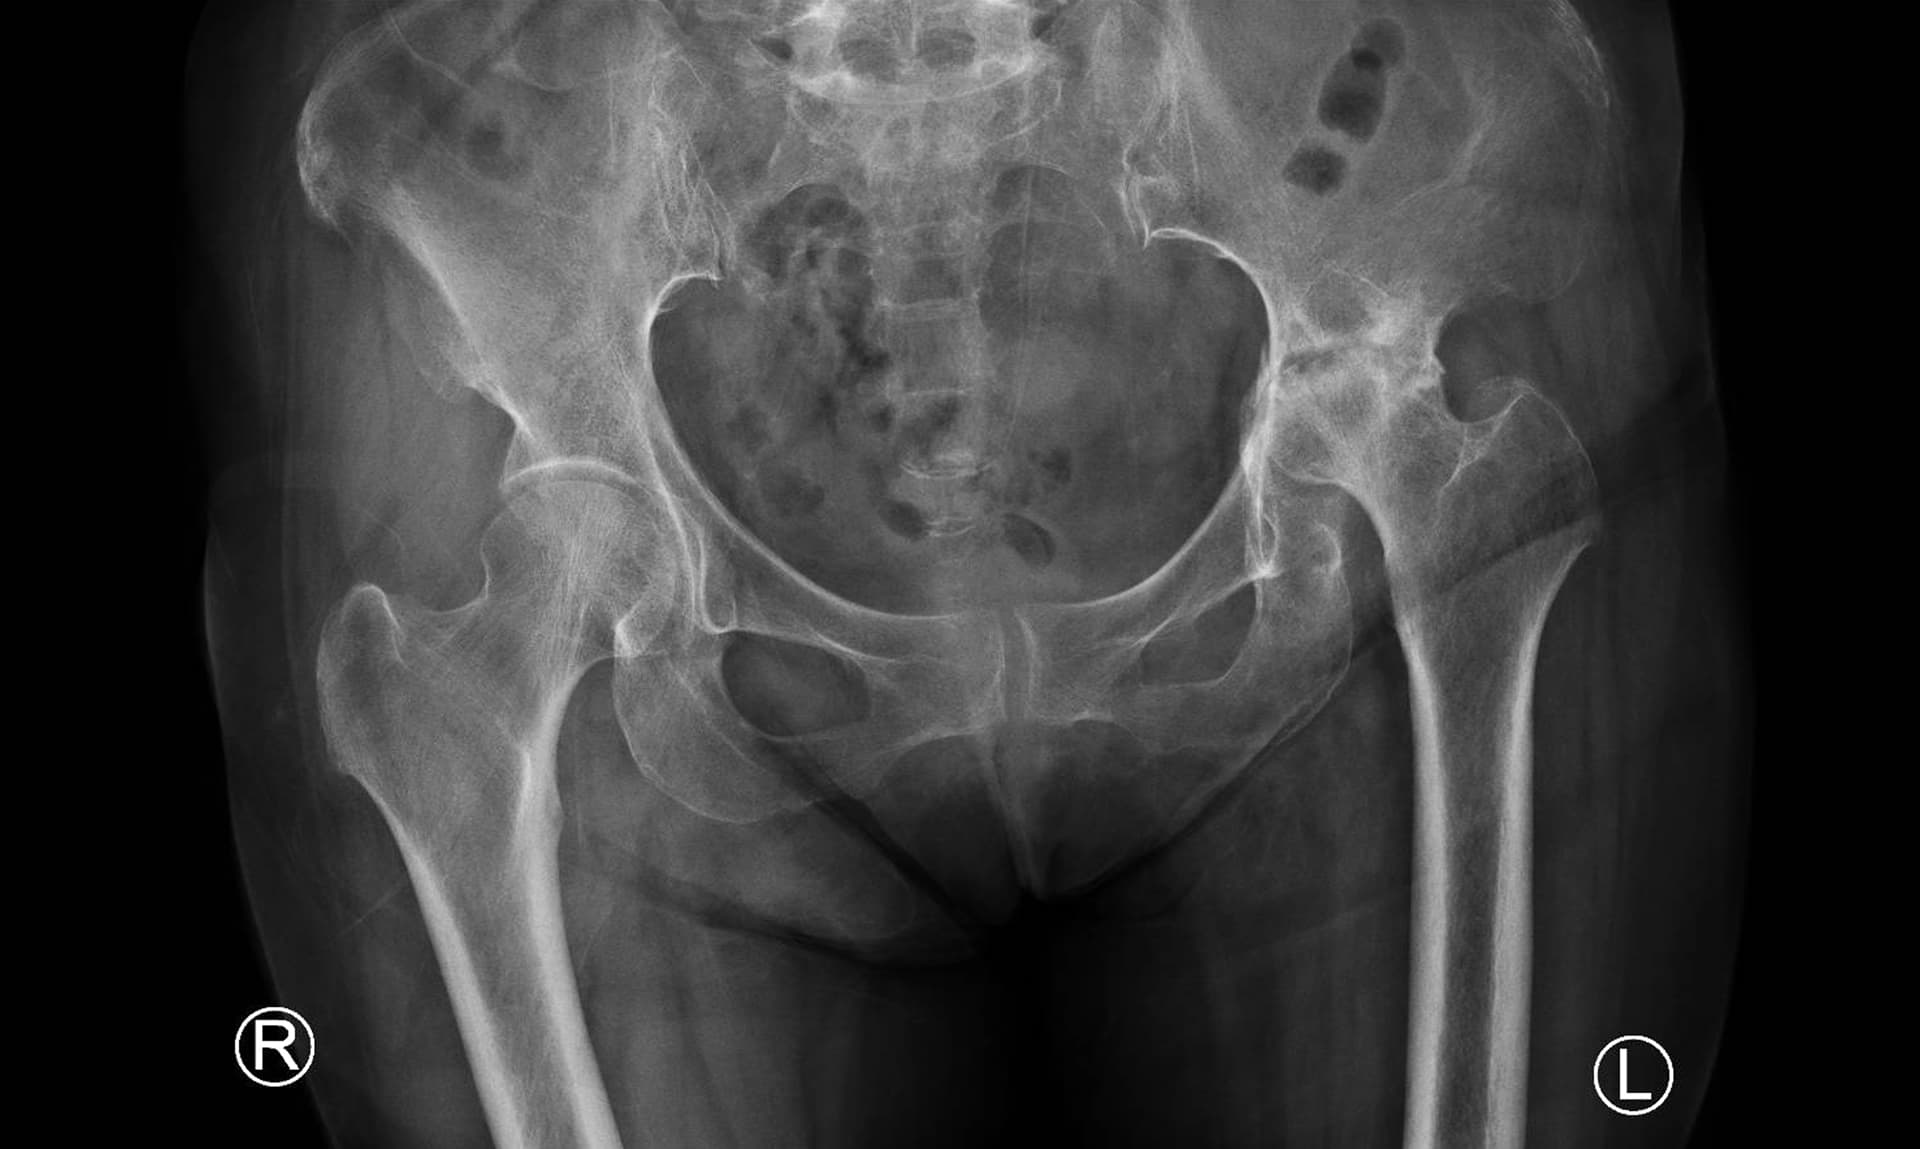 ostéonécrose de la hanche au stade arthrosique